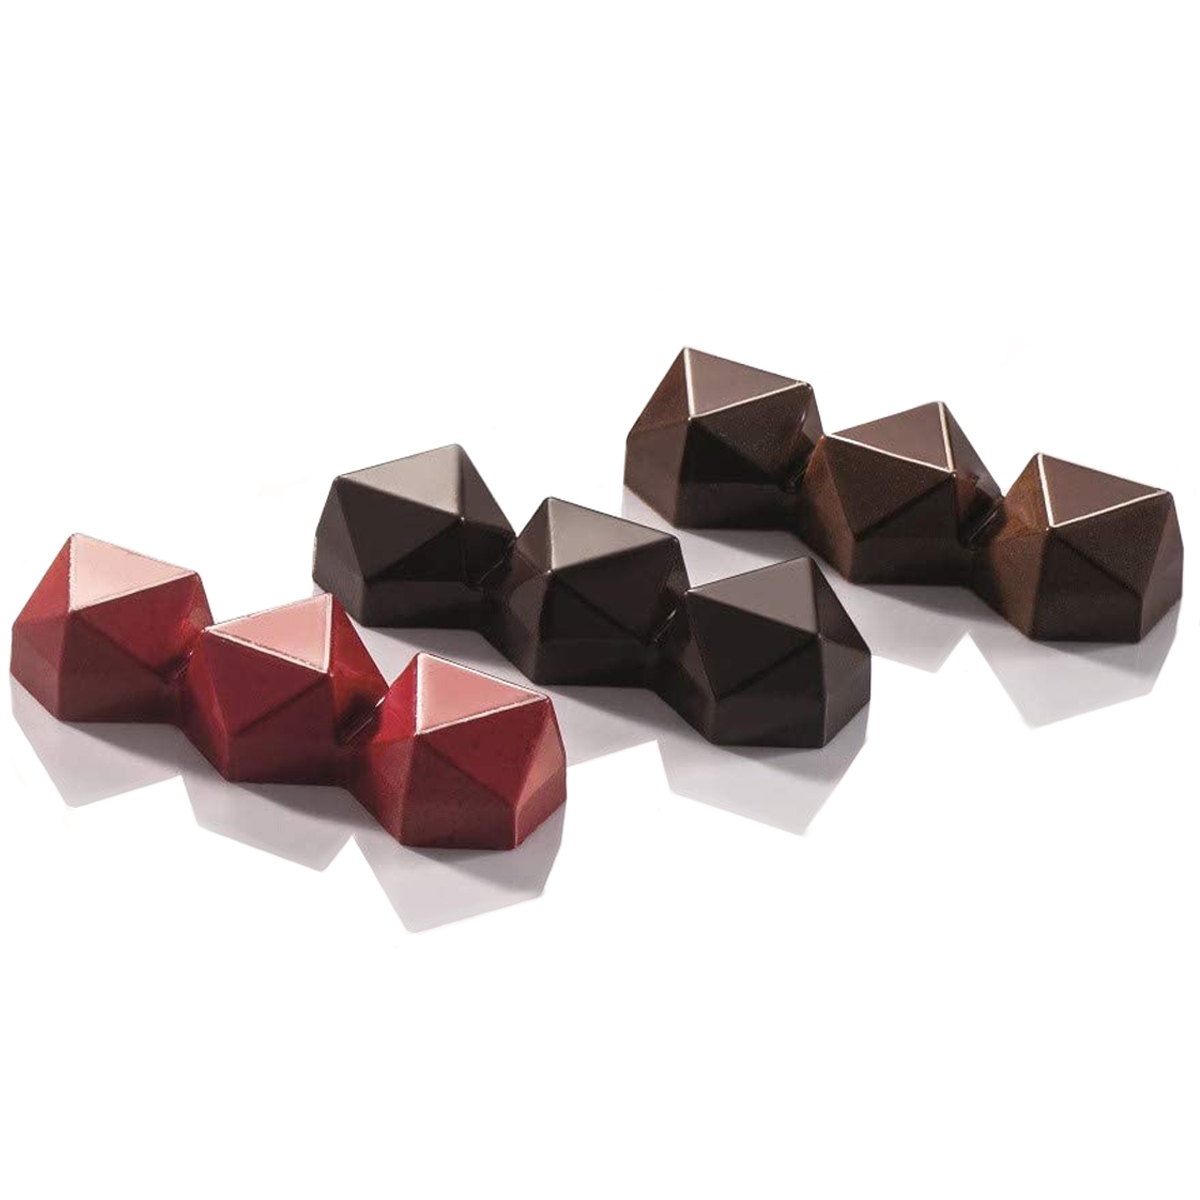 Форма для шоколада «Модерн Бон» (Modern Bon) поликарбонатная MA1924, Martellato, Италия  | Фото — Магазин Andy Chef  1